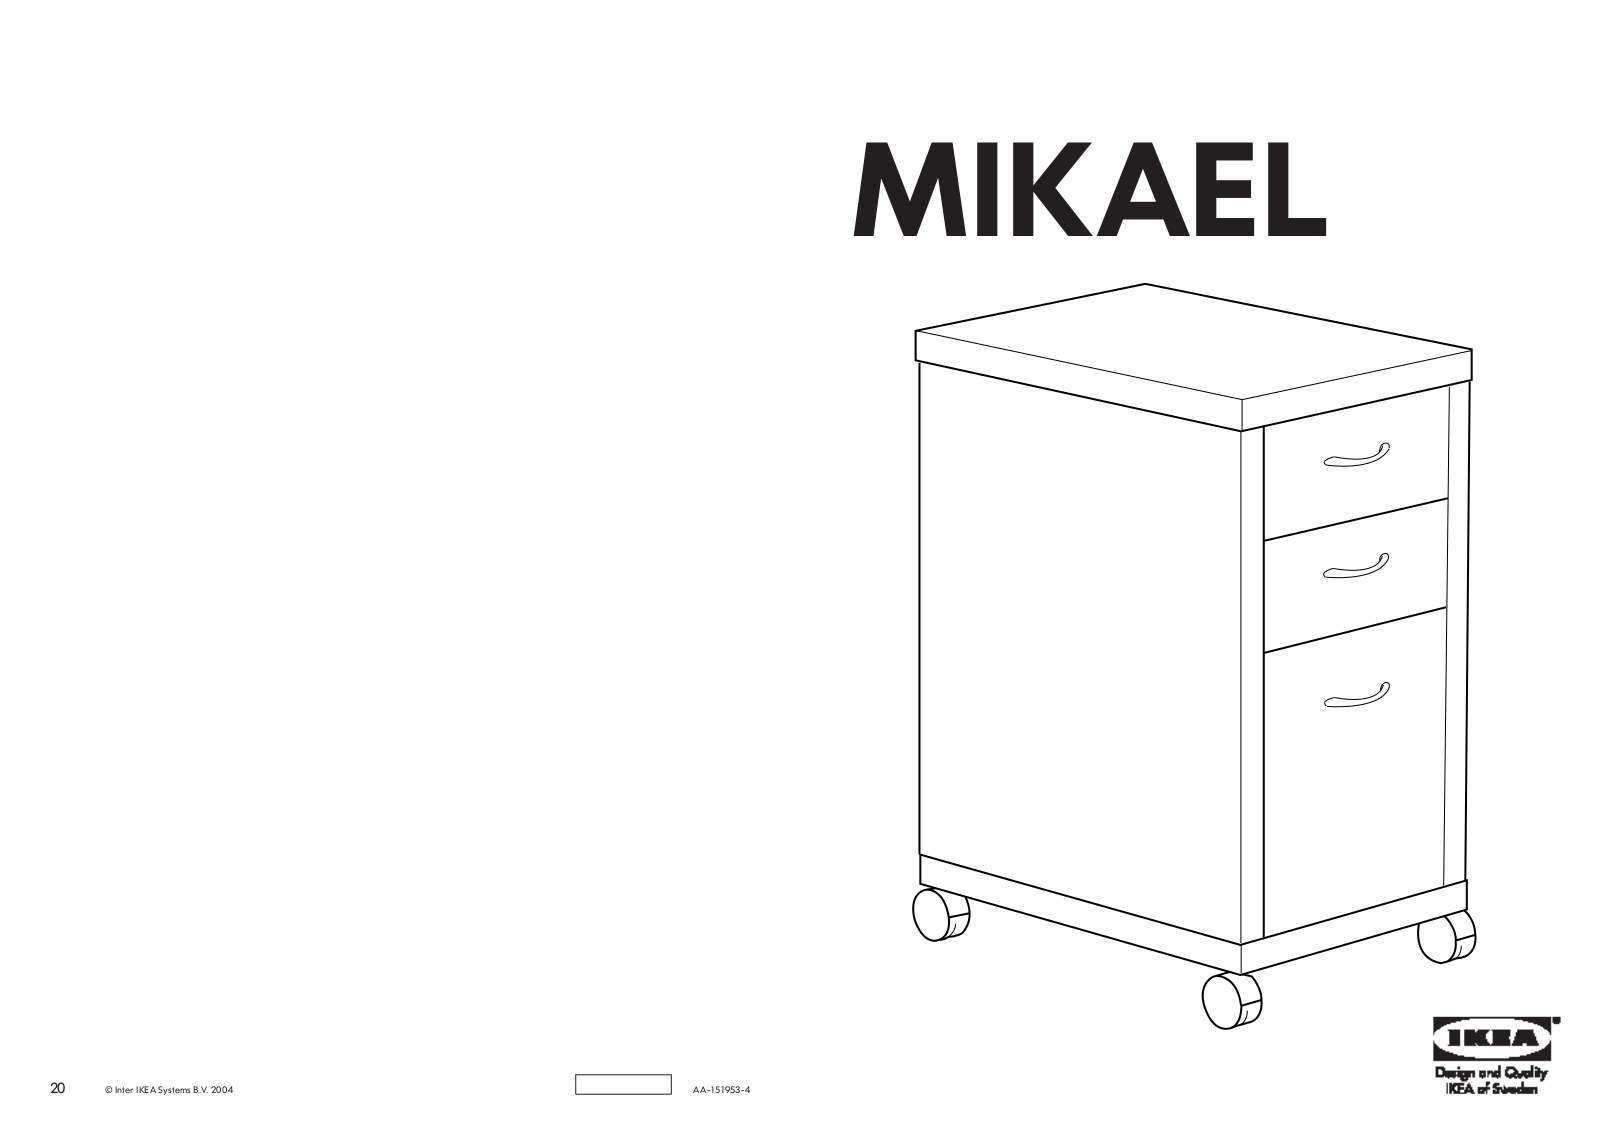 Ikea MIKAEL ASSEMBLY Manual